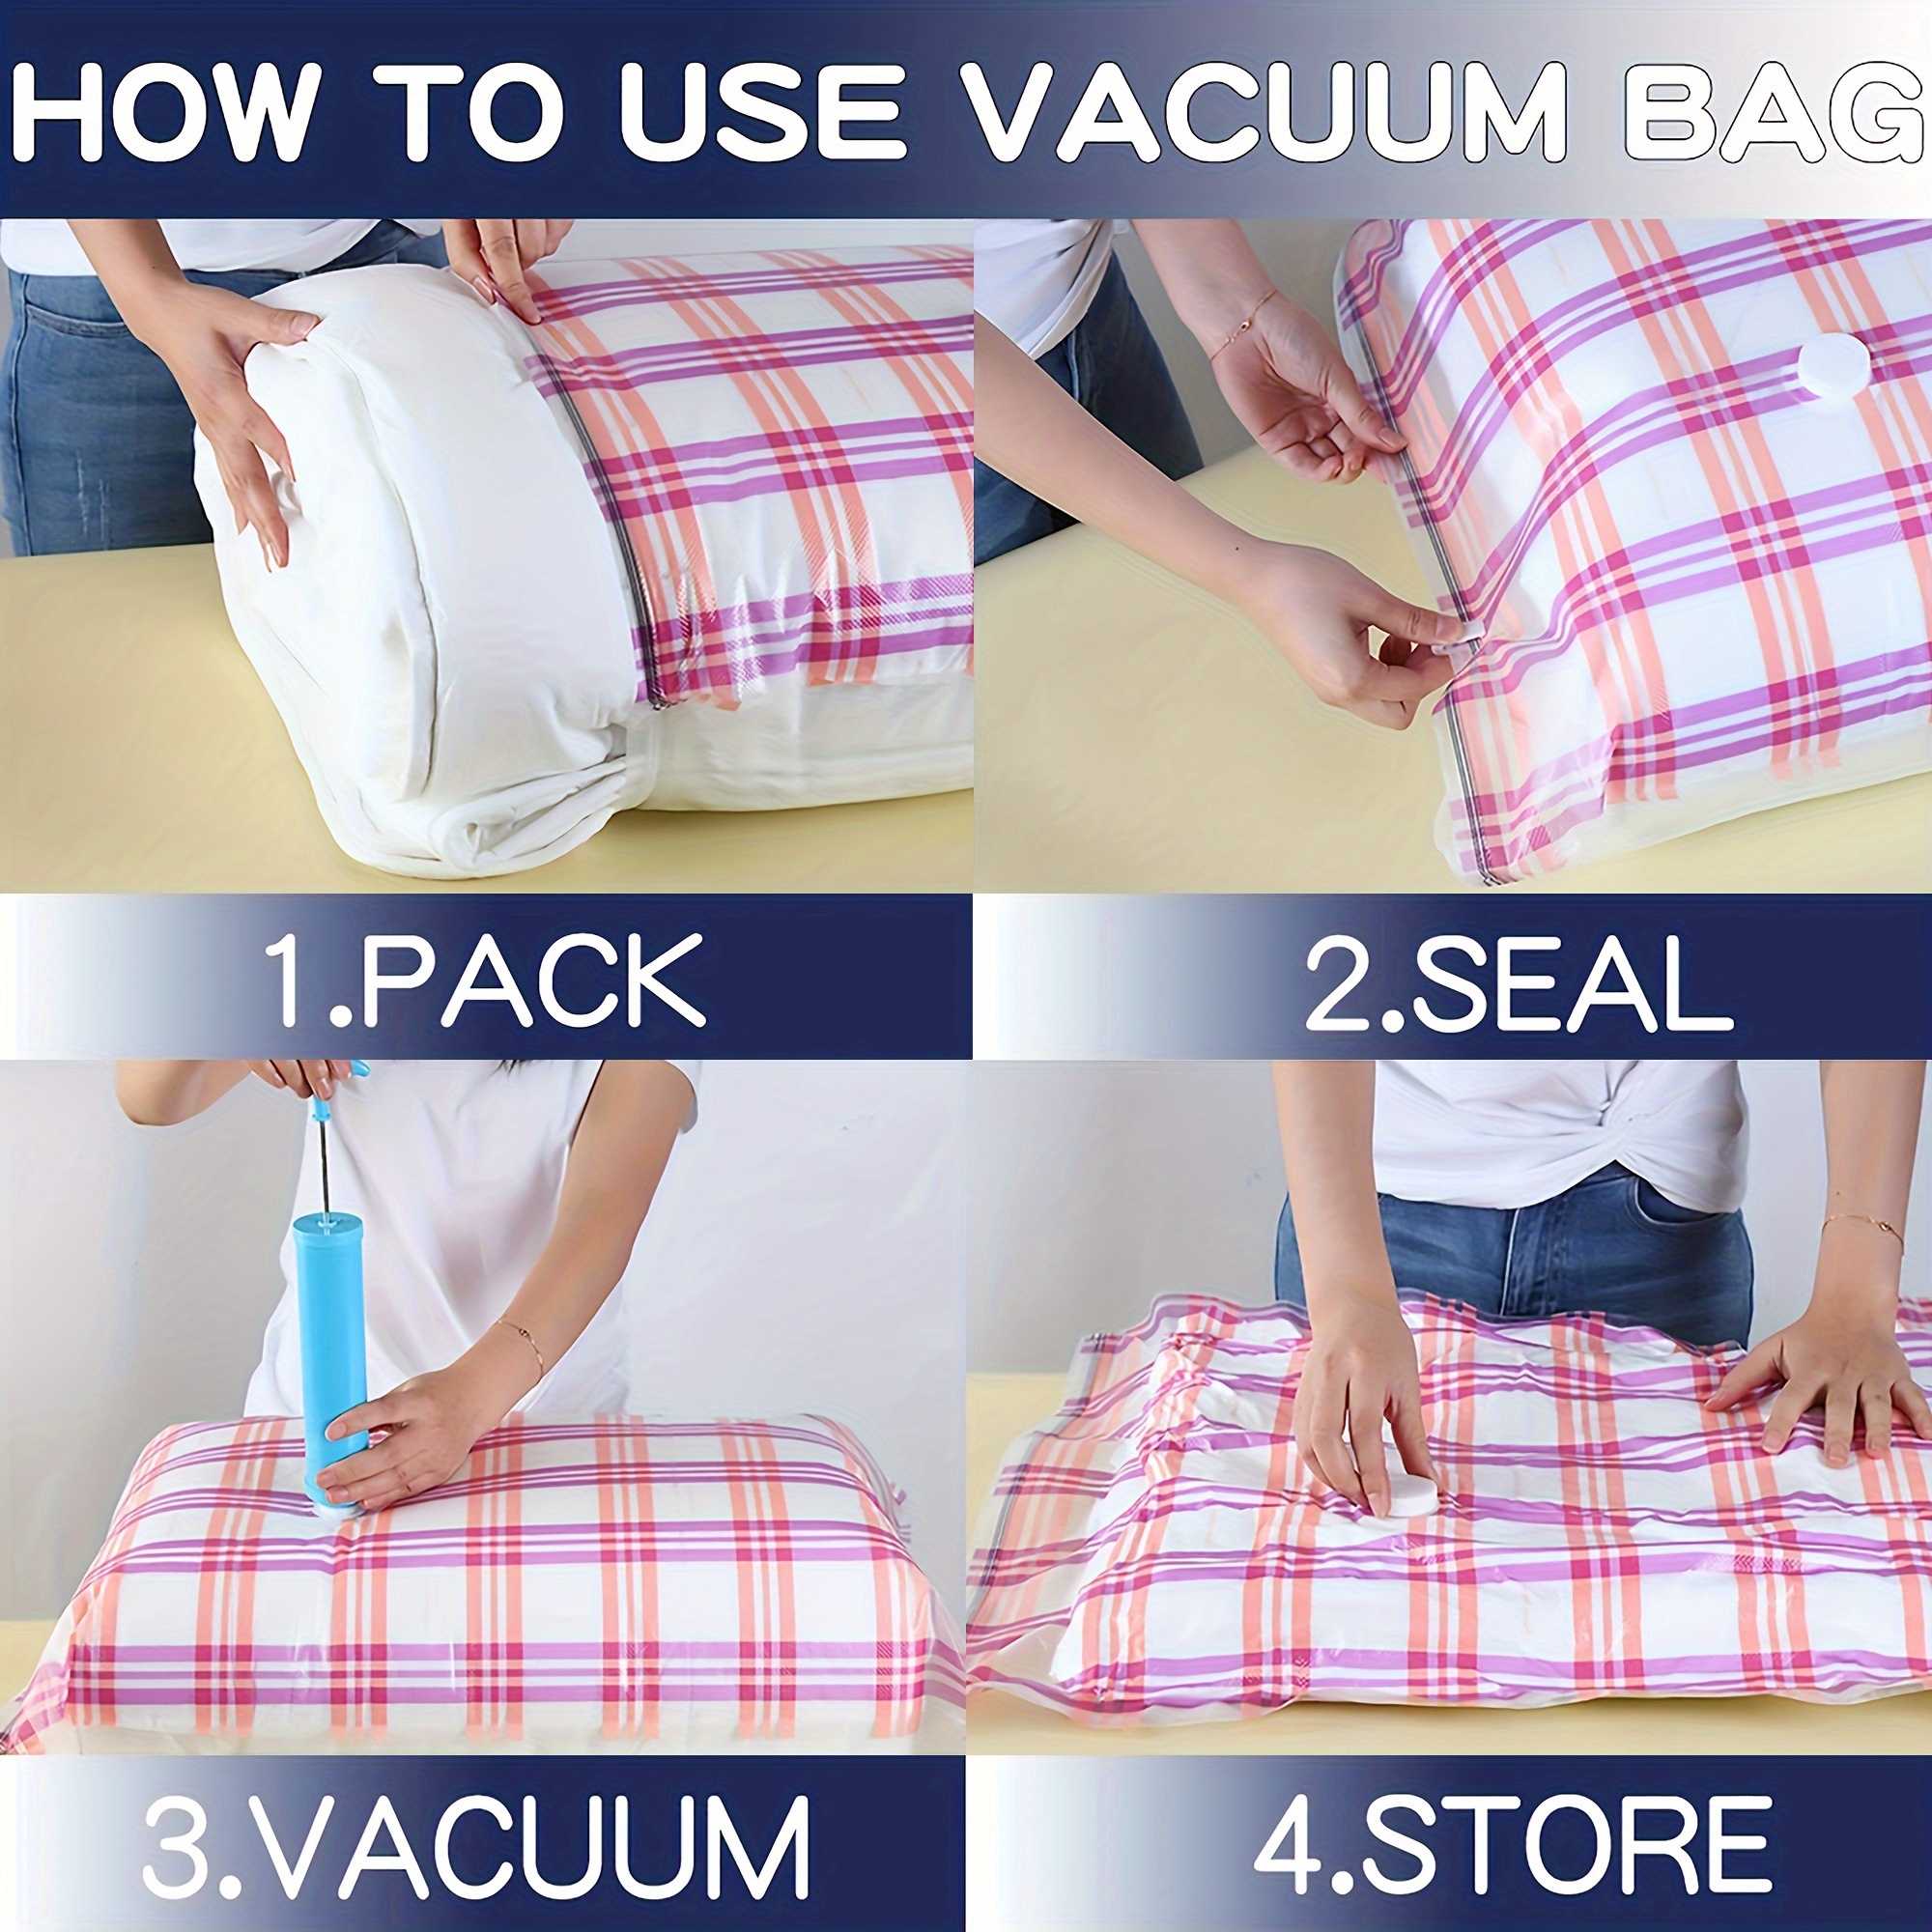 Jumbo Vacuum Seal Storage Bags - 2 Pack